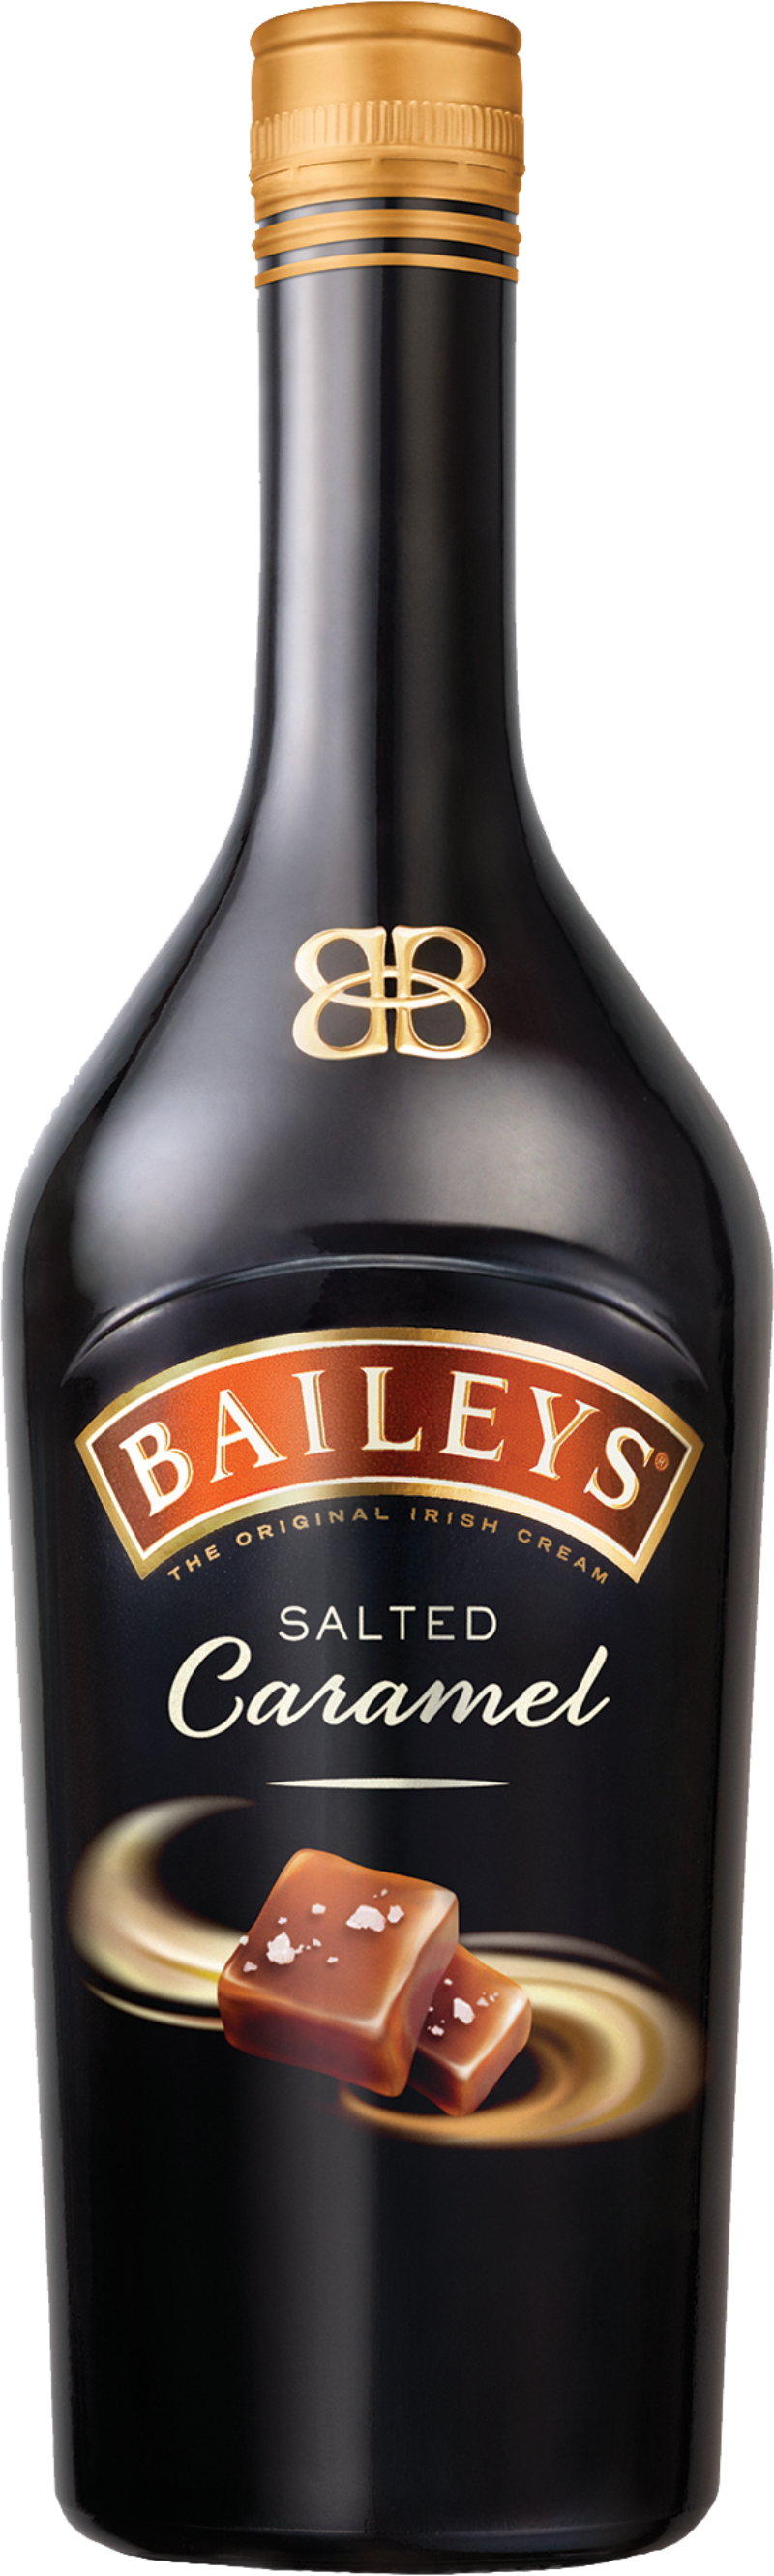 vol 100 cl Baileys Caramel Salted - 17%